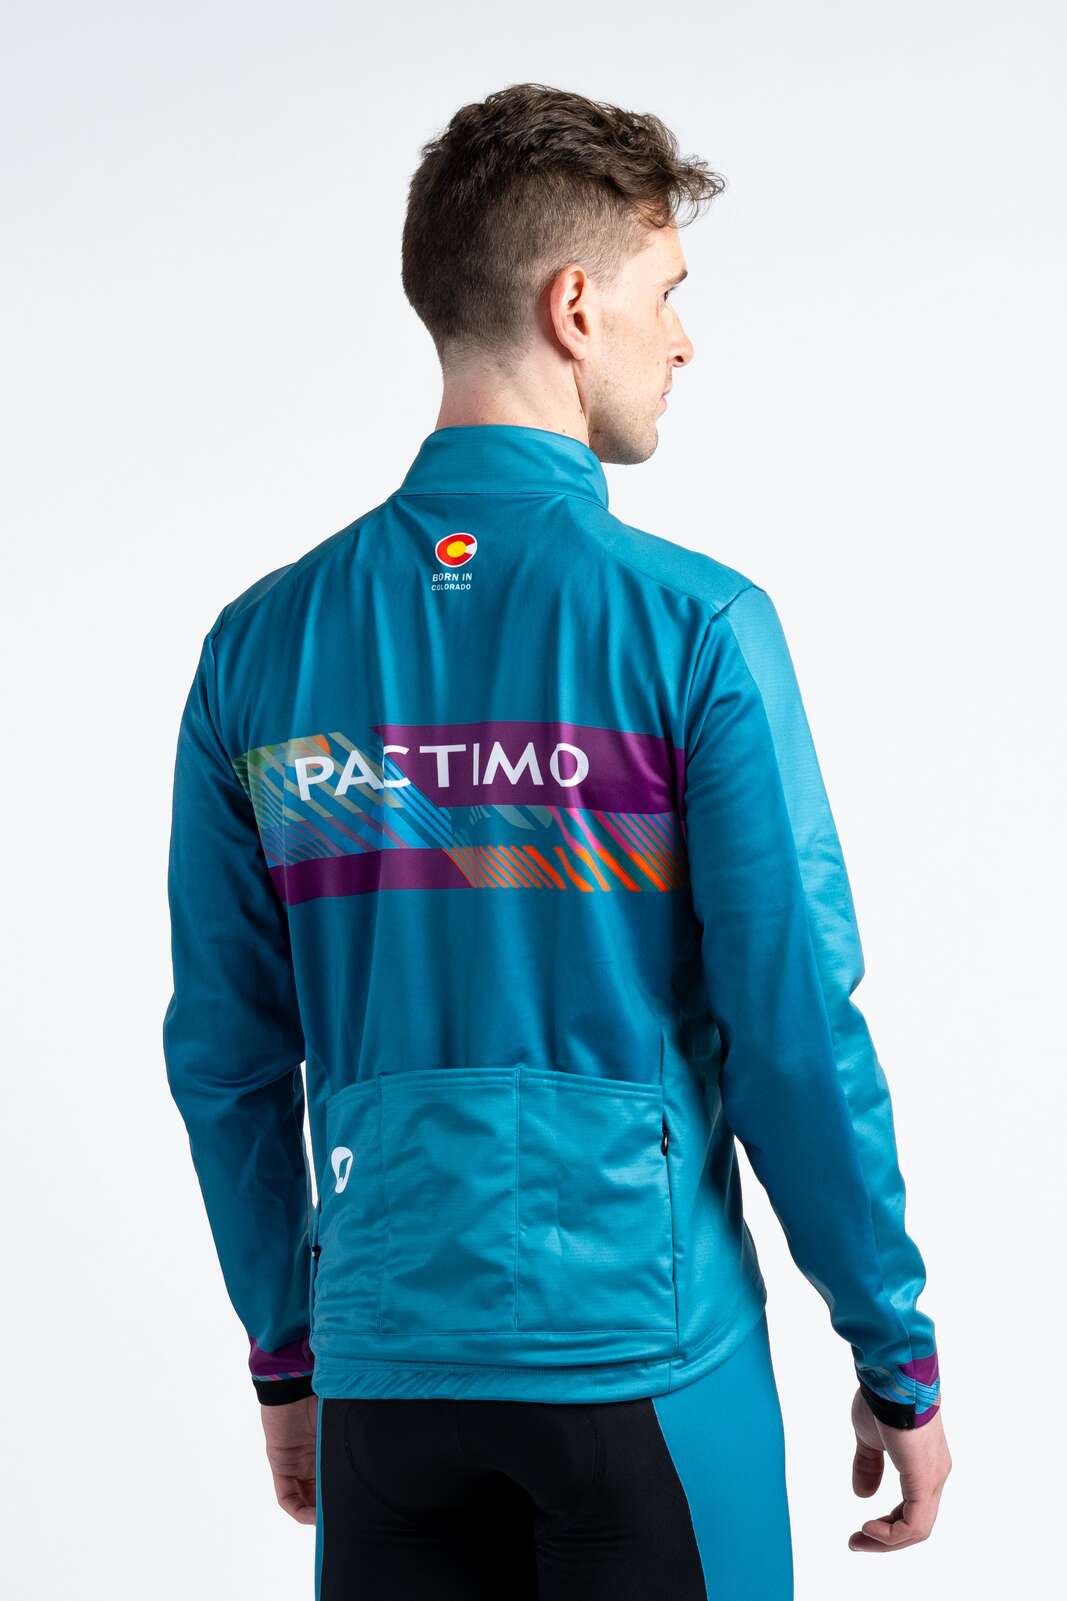 Men's Custom Cycling Jacket - Alpine Back View